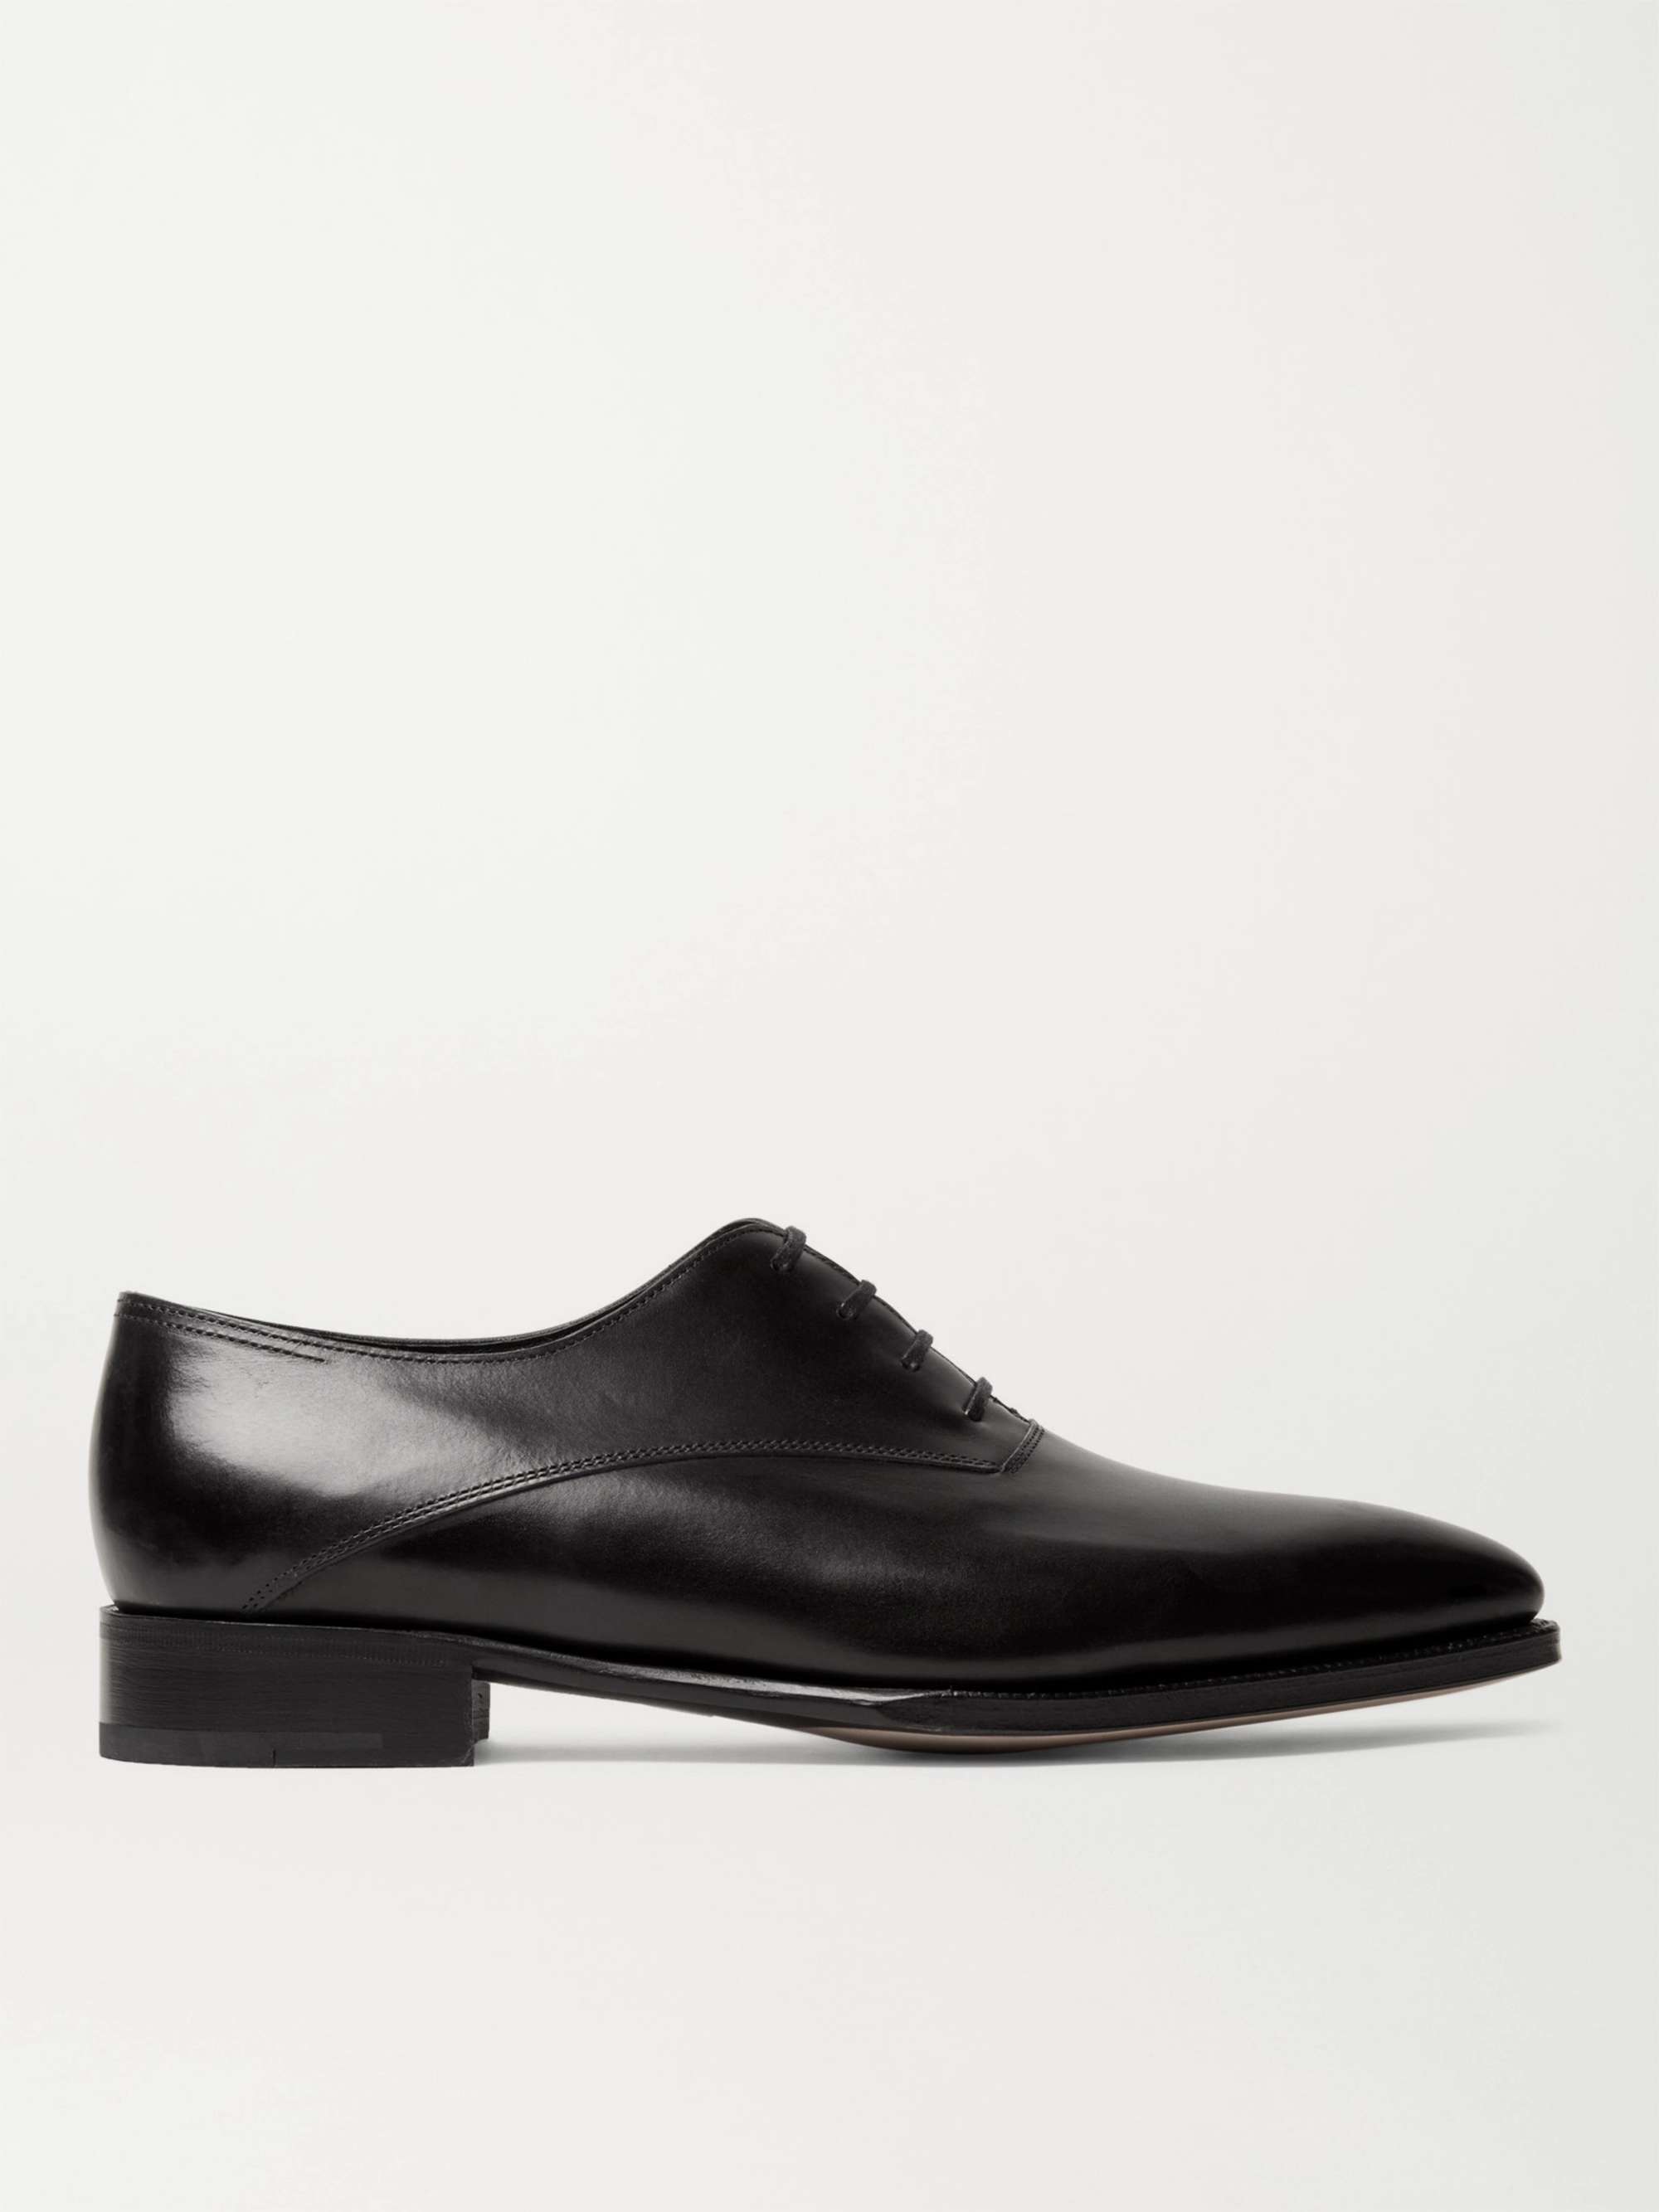 JOHN LOBB Prestige Becketts Leather Oxford Shoes MR PORTER